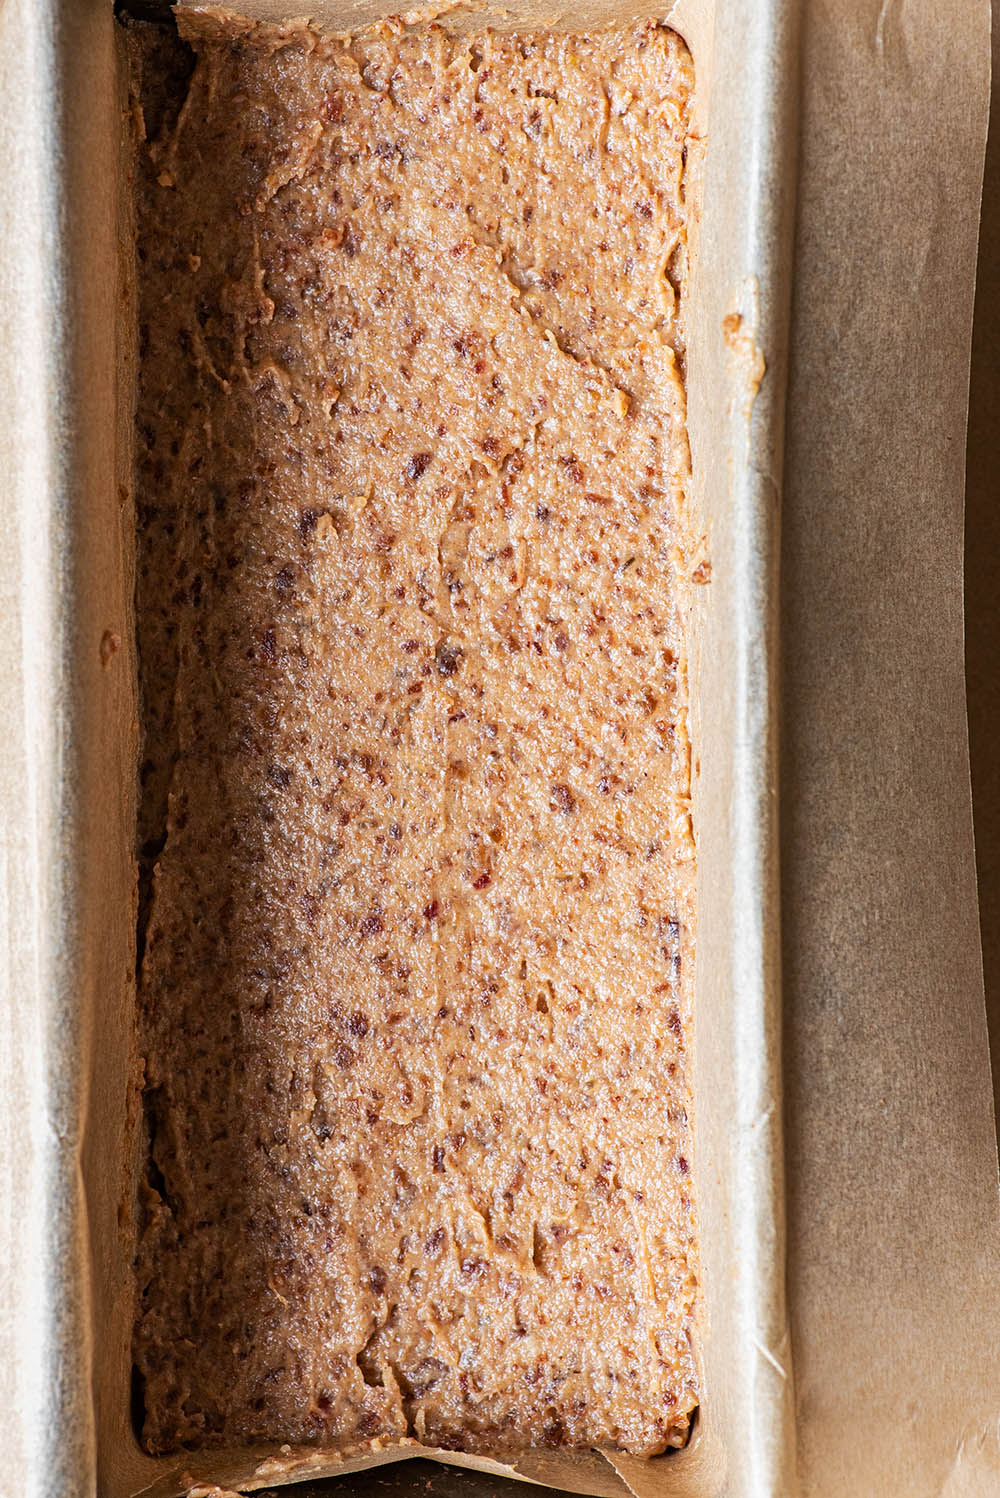 Date caramel spread into an even layer over the shortbread base.